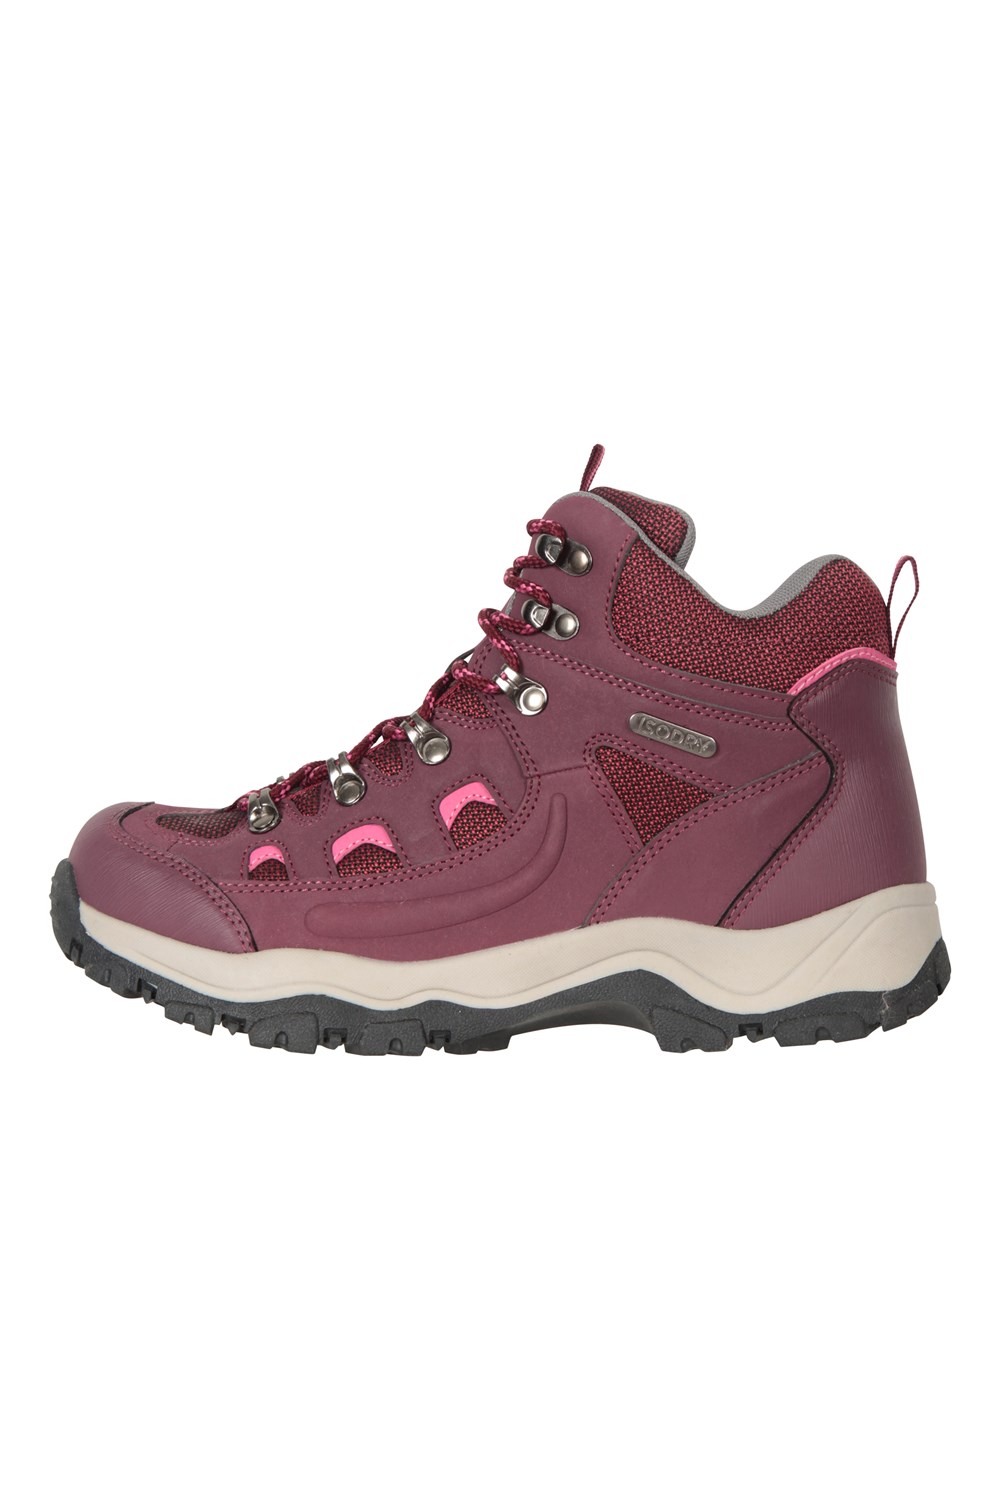 Mountain Warehouse Adventurer Womens Waterproof Boots - Hiking Trekking ...